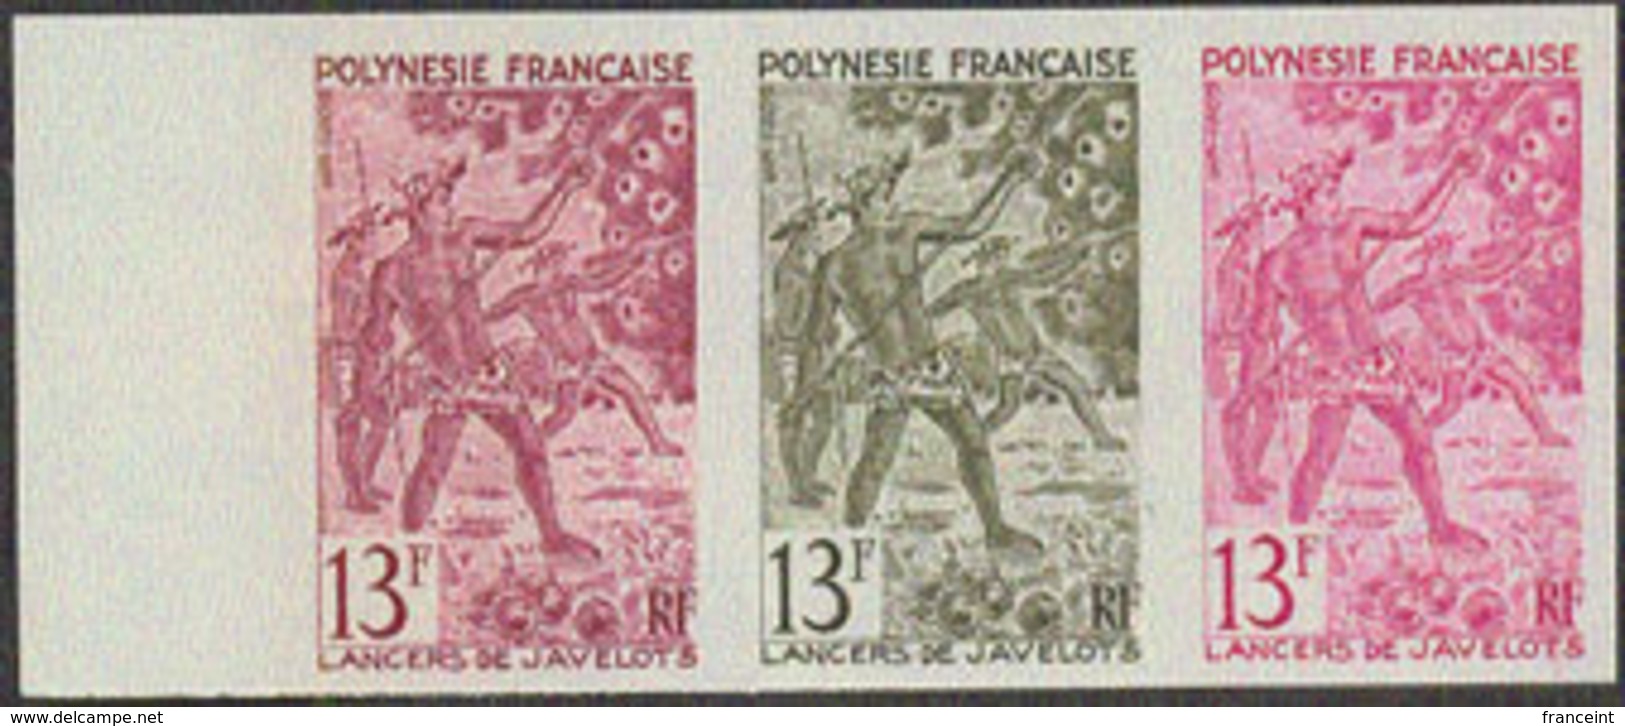 FRENCH POLYNESIA (1967) Javelin Throwing. Trial Color Proof Strip Of 3. Scott No 229, Yvert No 48. - Non Dentelés, épreuves & Variétés